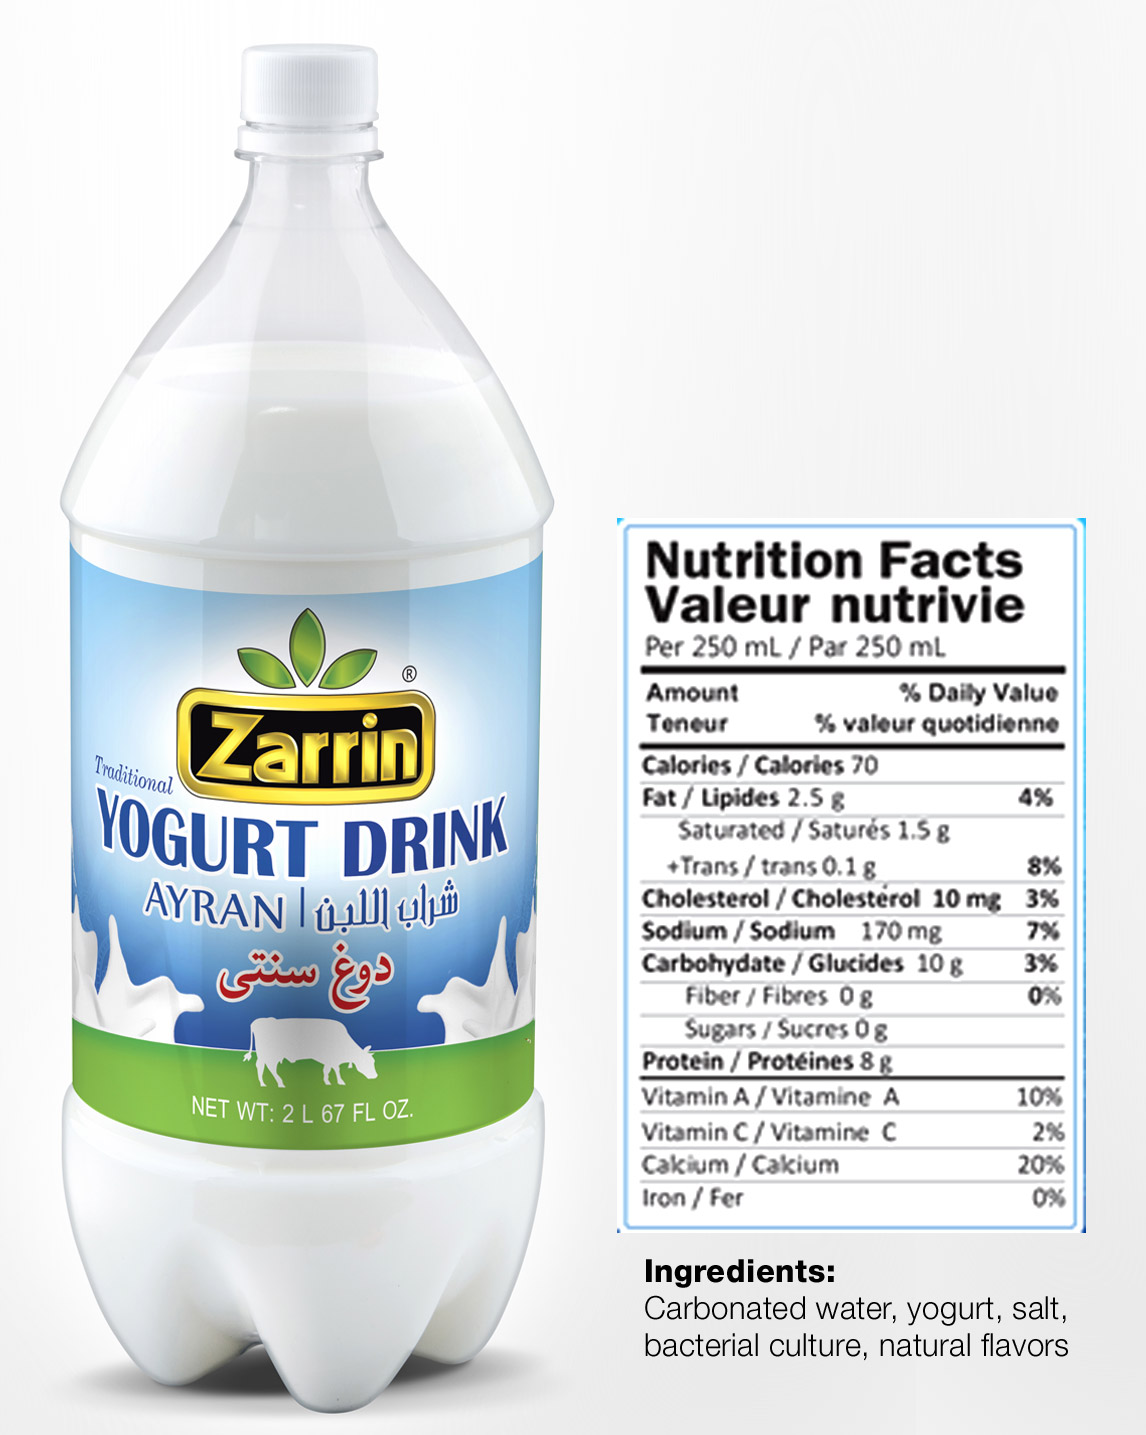 Doogh (yogurt drink) with traditional flavor by Zarrin.